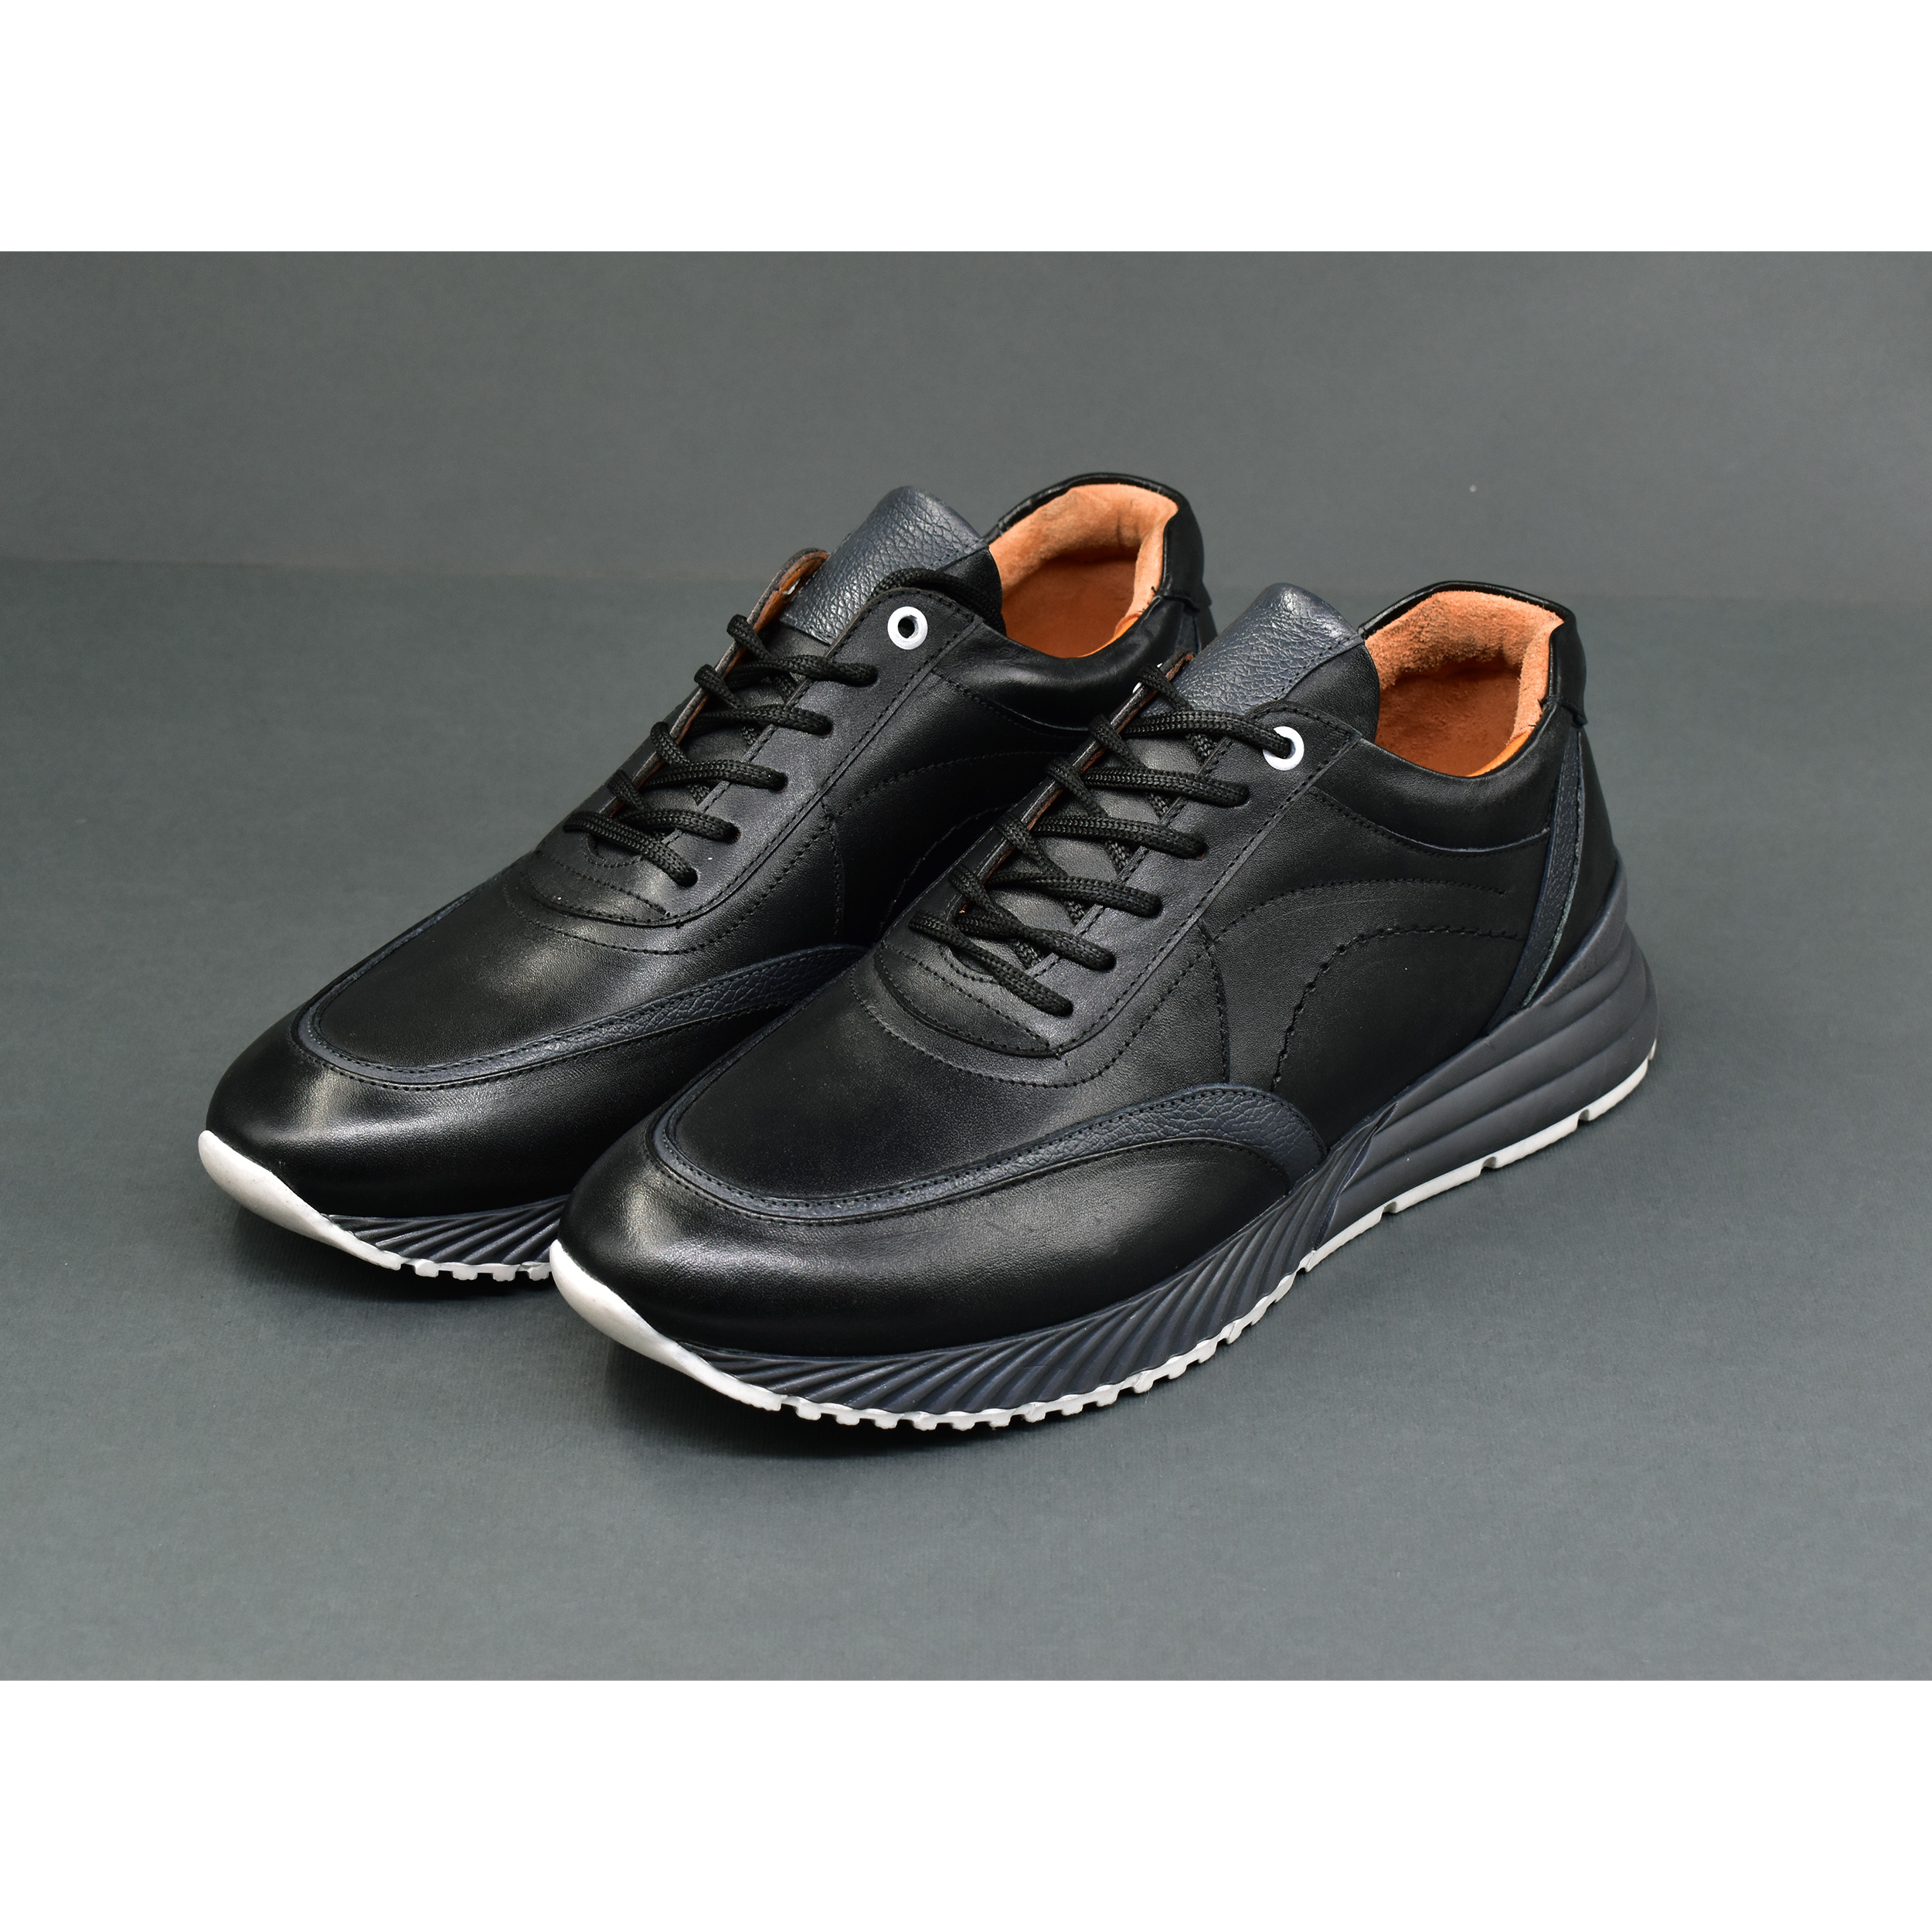 کفش روزمره مردانه پاما مدل ME-631 کد G1808 -  - 3